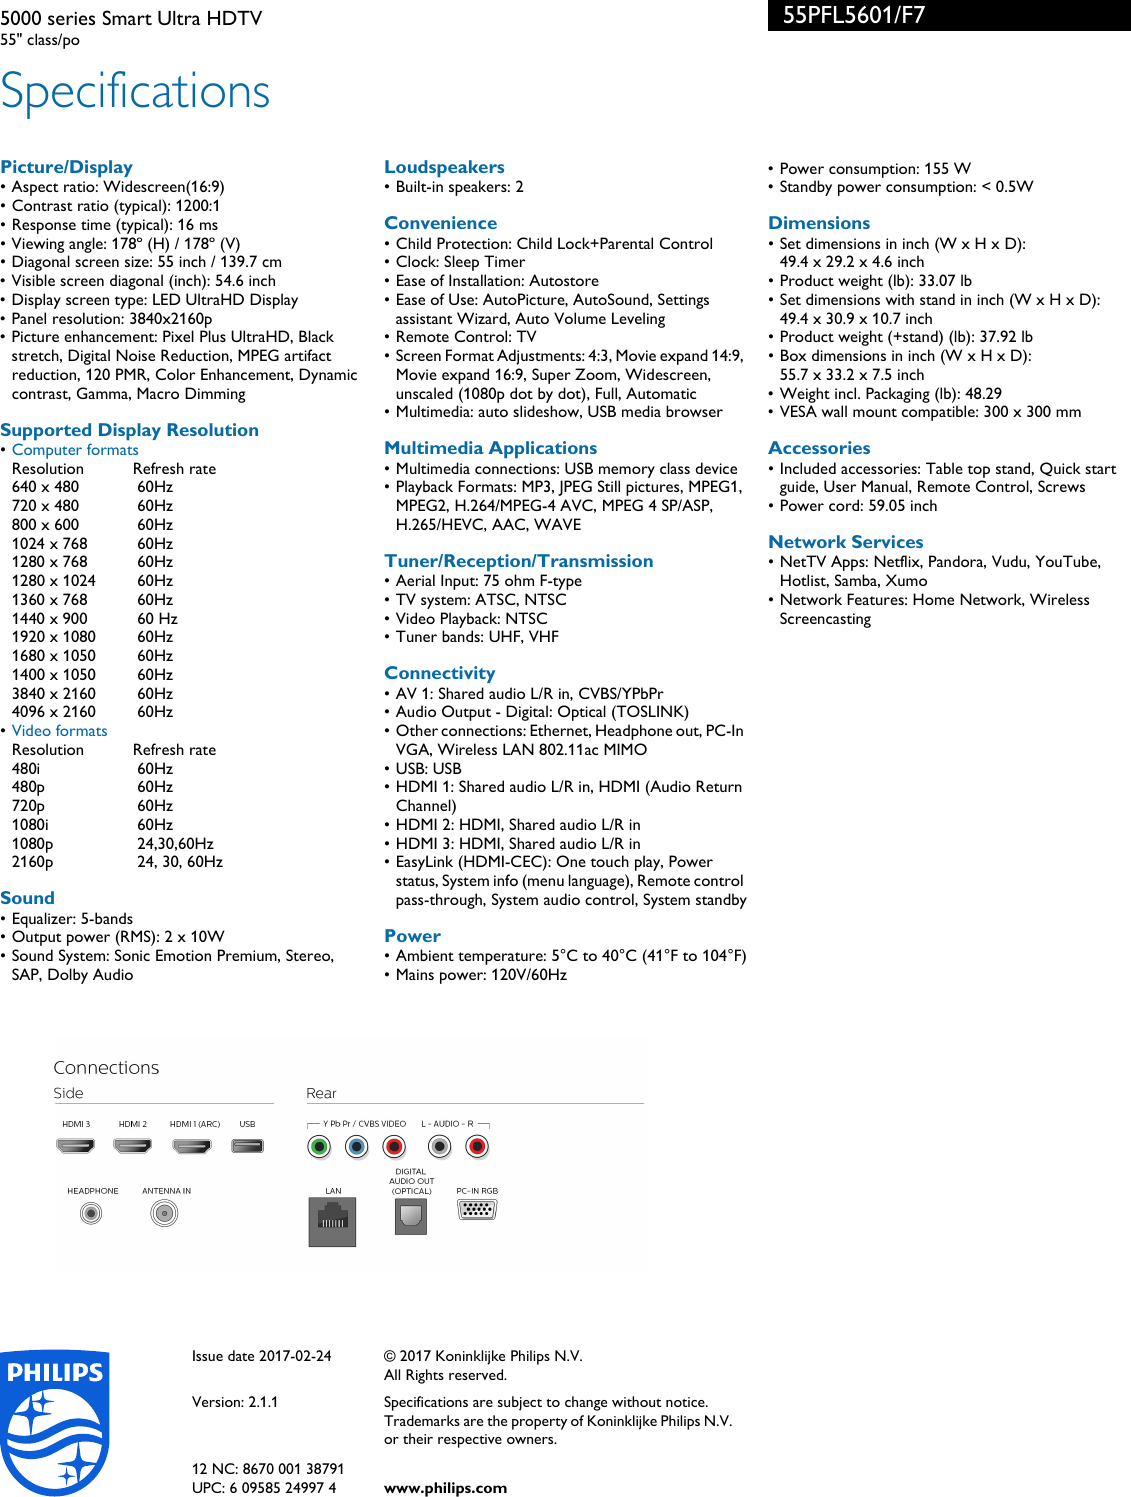 Page 3 of 3 - Philips 55PFL5601/F7 5000 Series Smart Ultra HDTV User Manual Leaflet 55pfl5601 F7 Pss Aenus